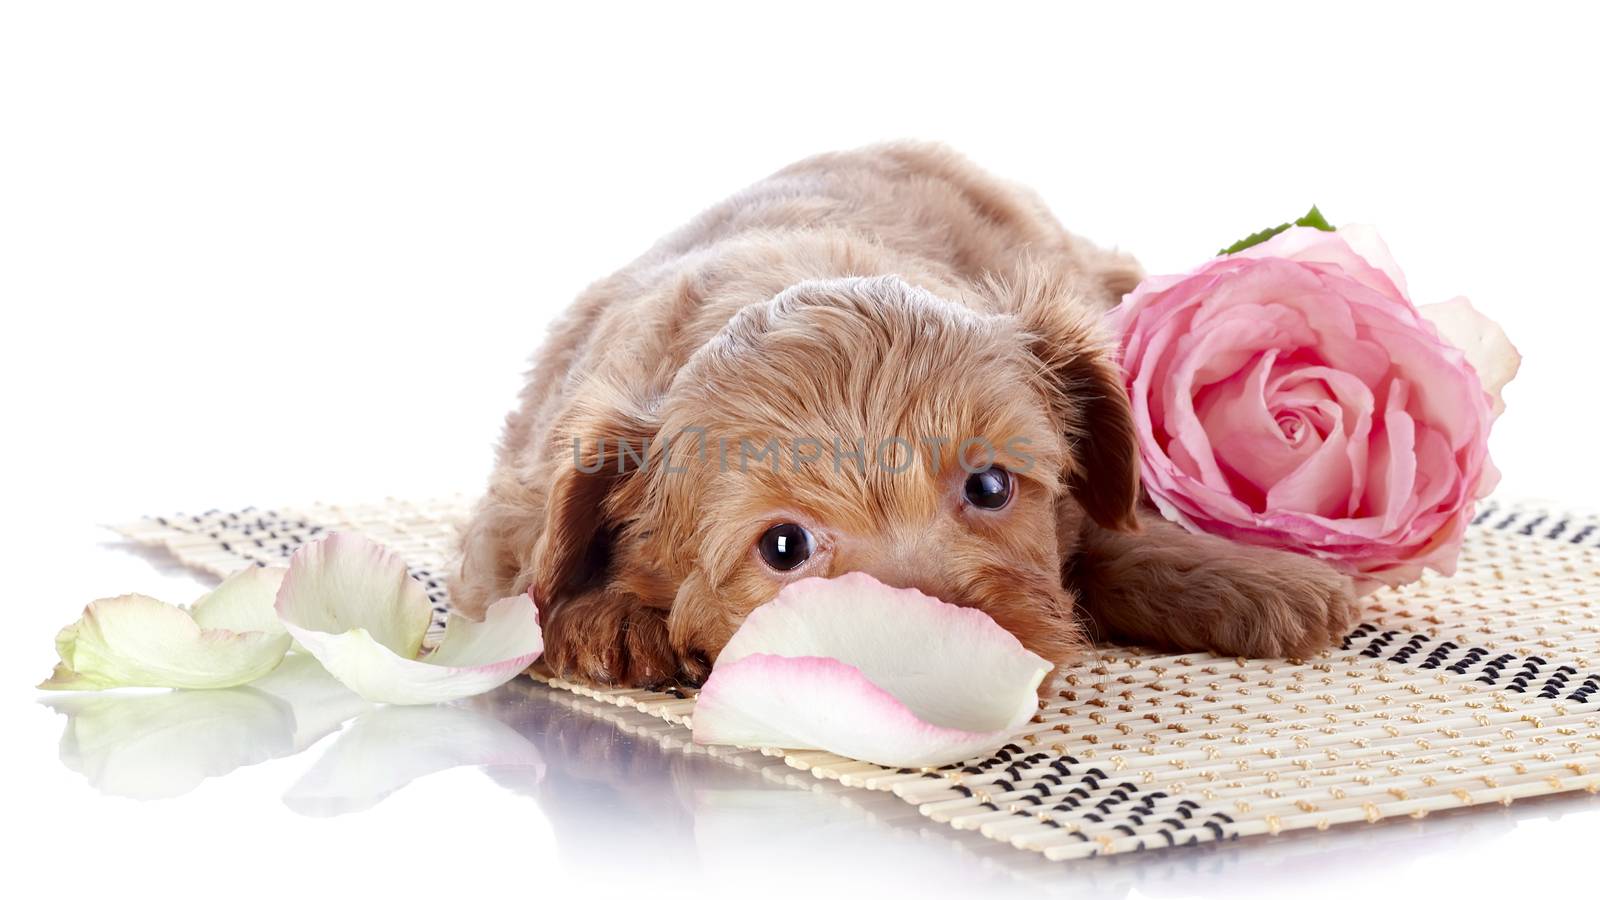 Puppy on a rug with a pink rose by Azaliya